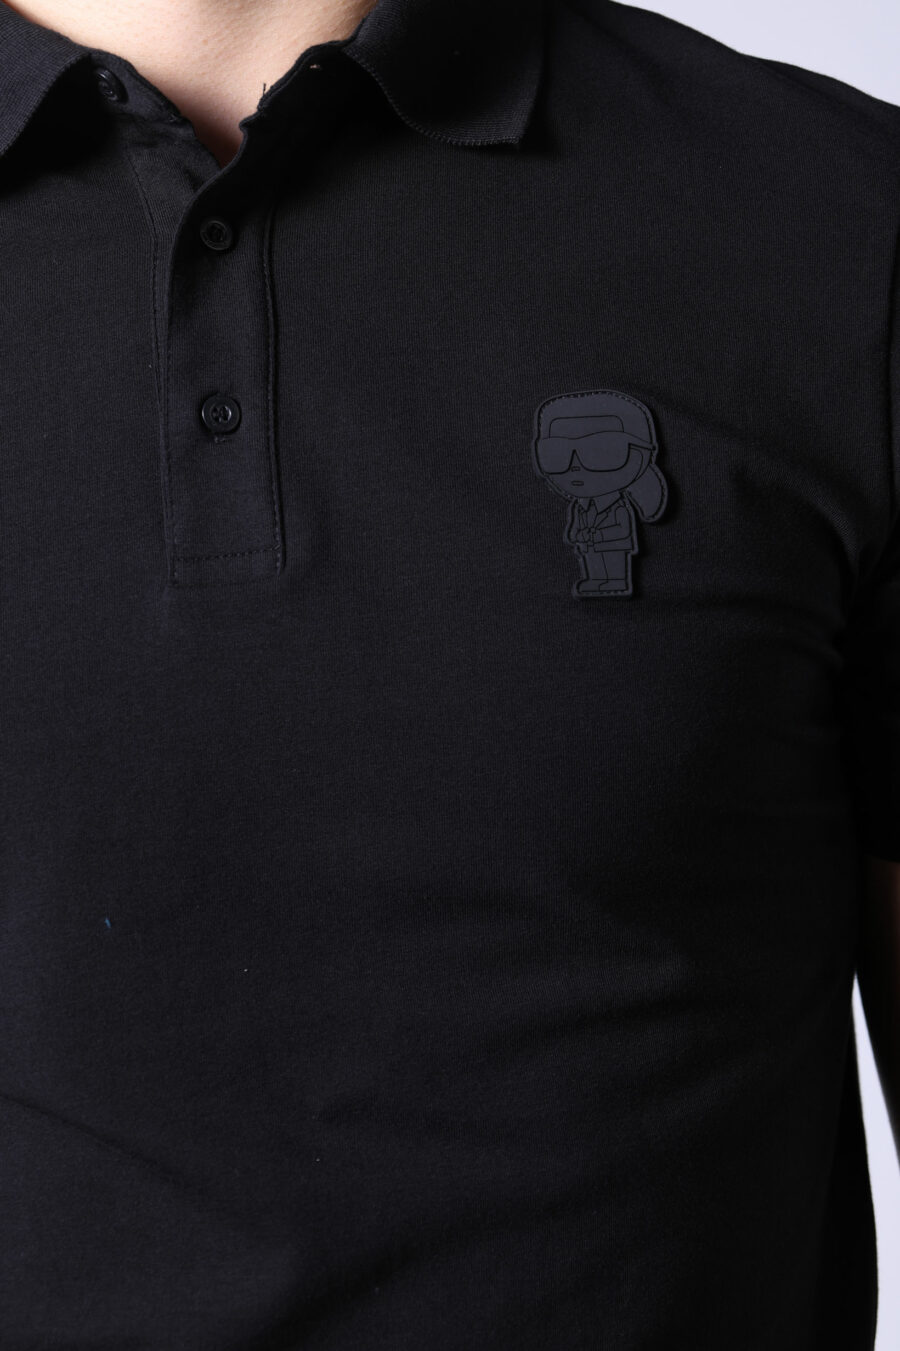 Black polo shirt with monochrome mini-logo - Untitled Catalog 05717